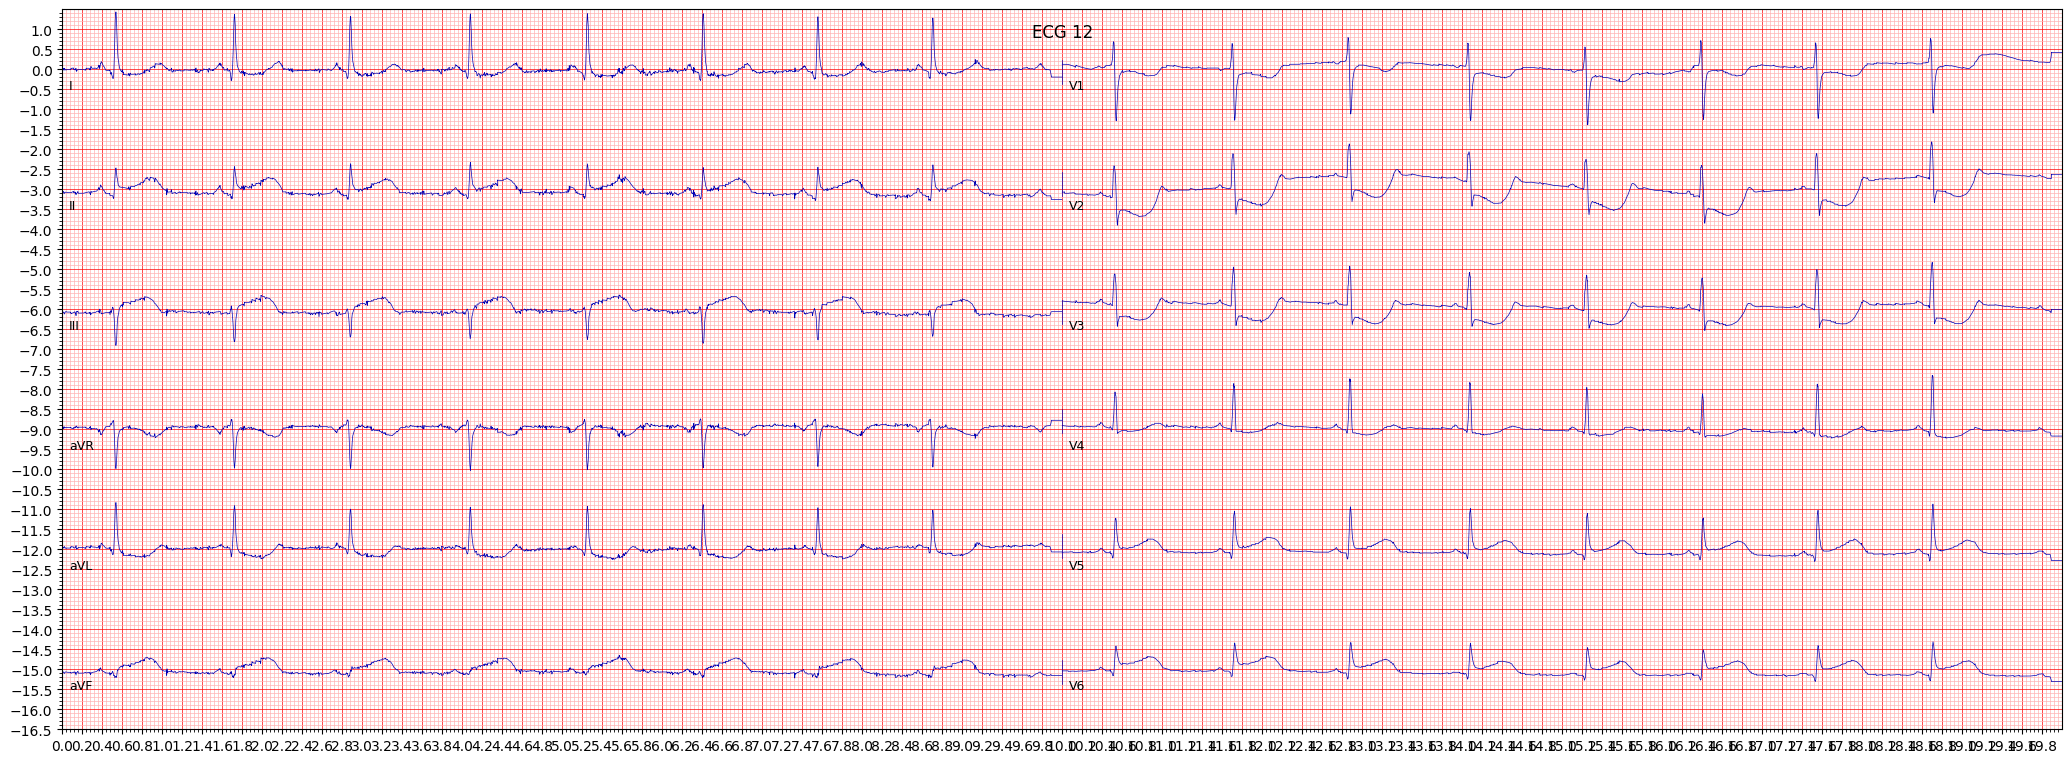 inferoposterolateral myocardial infarction (IPLMI) example 2993